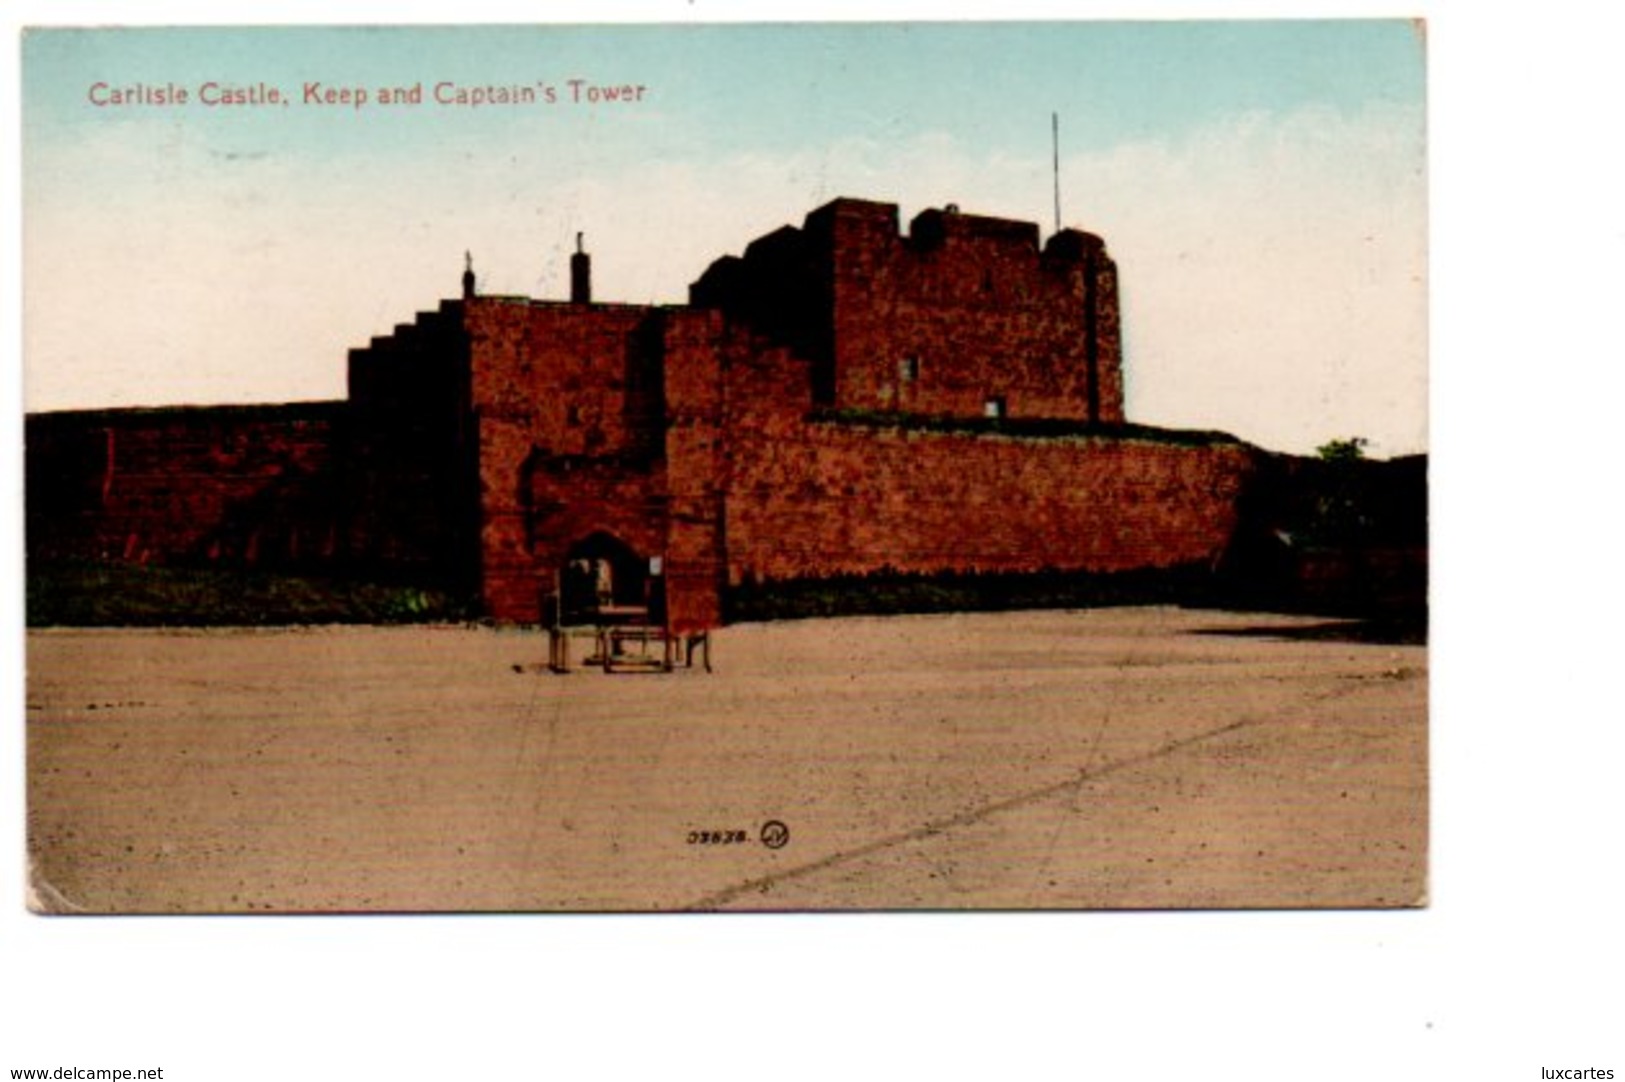 CARLISLE CASTLE. KEEP AND CAPTAIN' S TOWER. - Carlisle